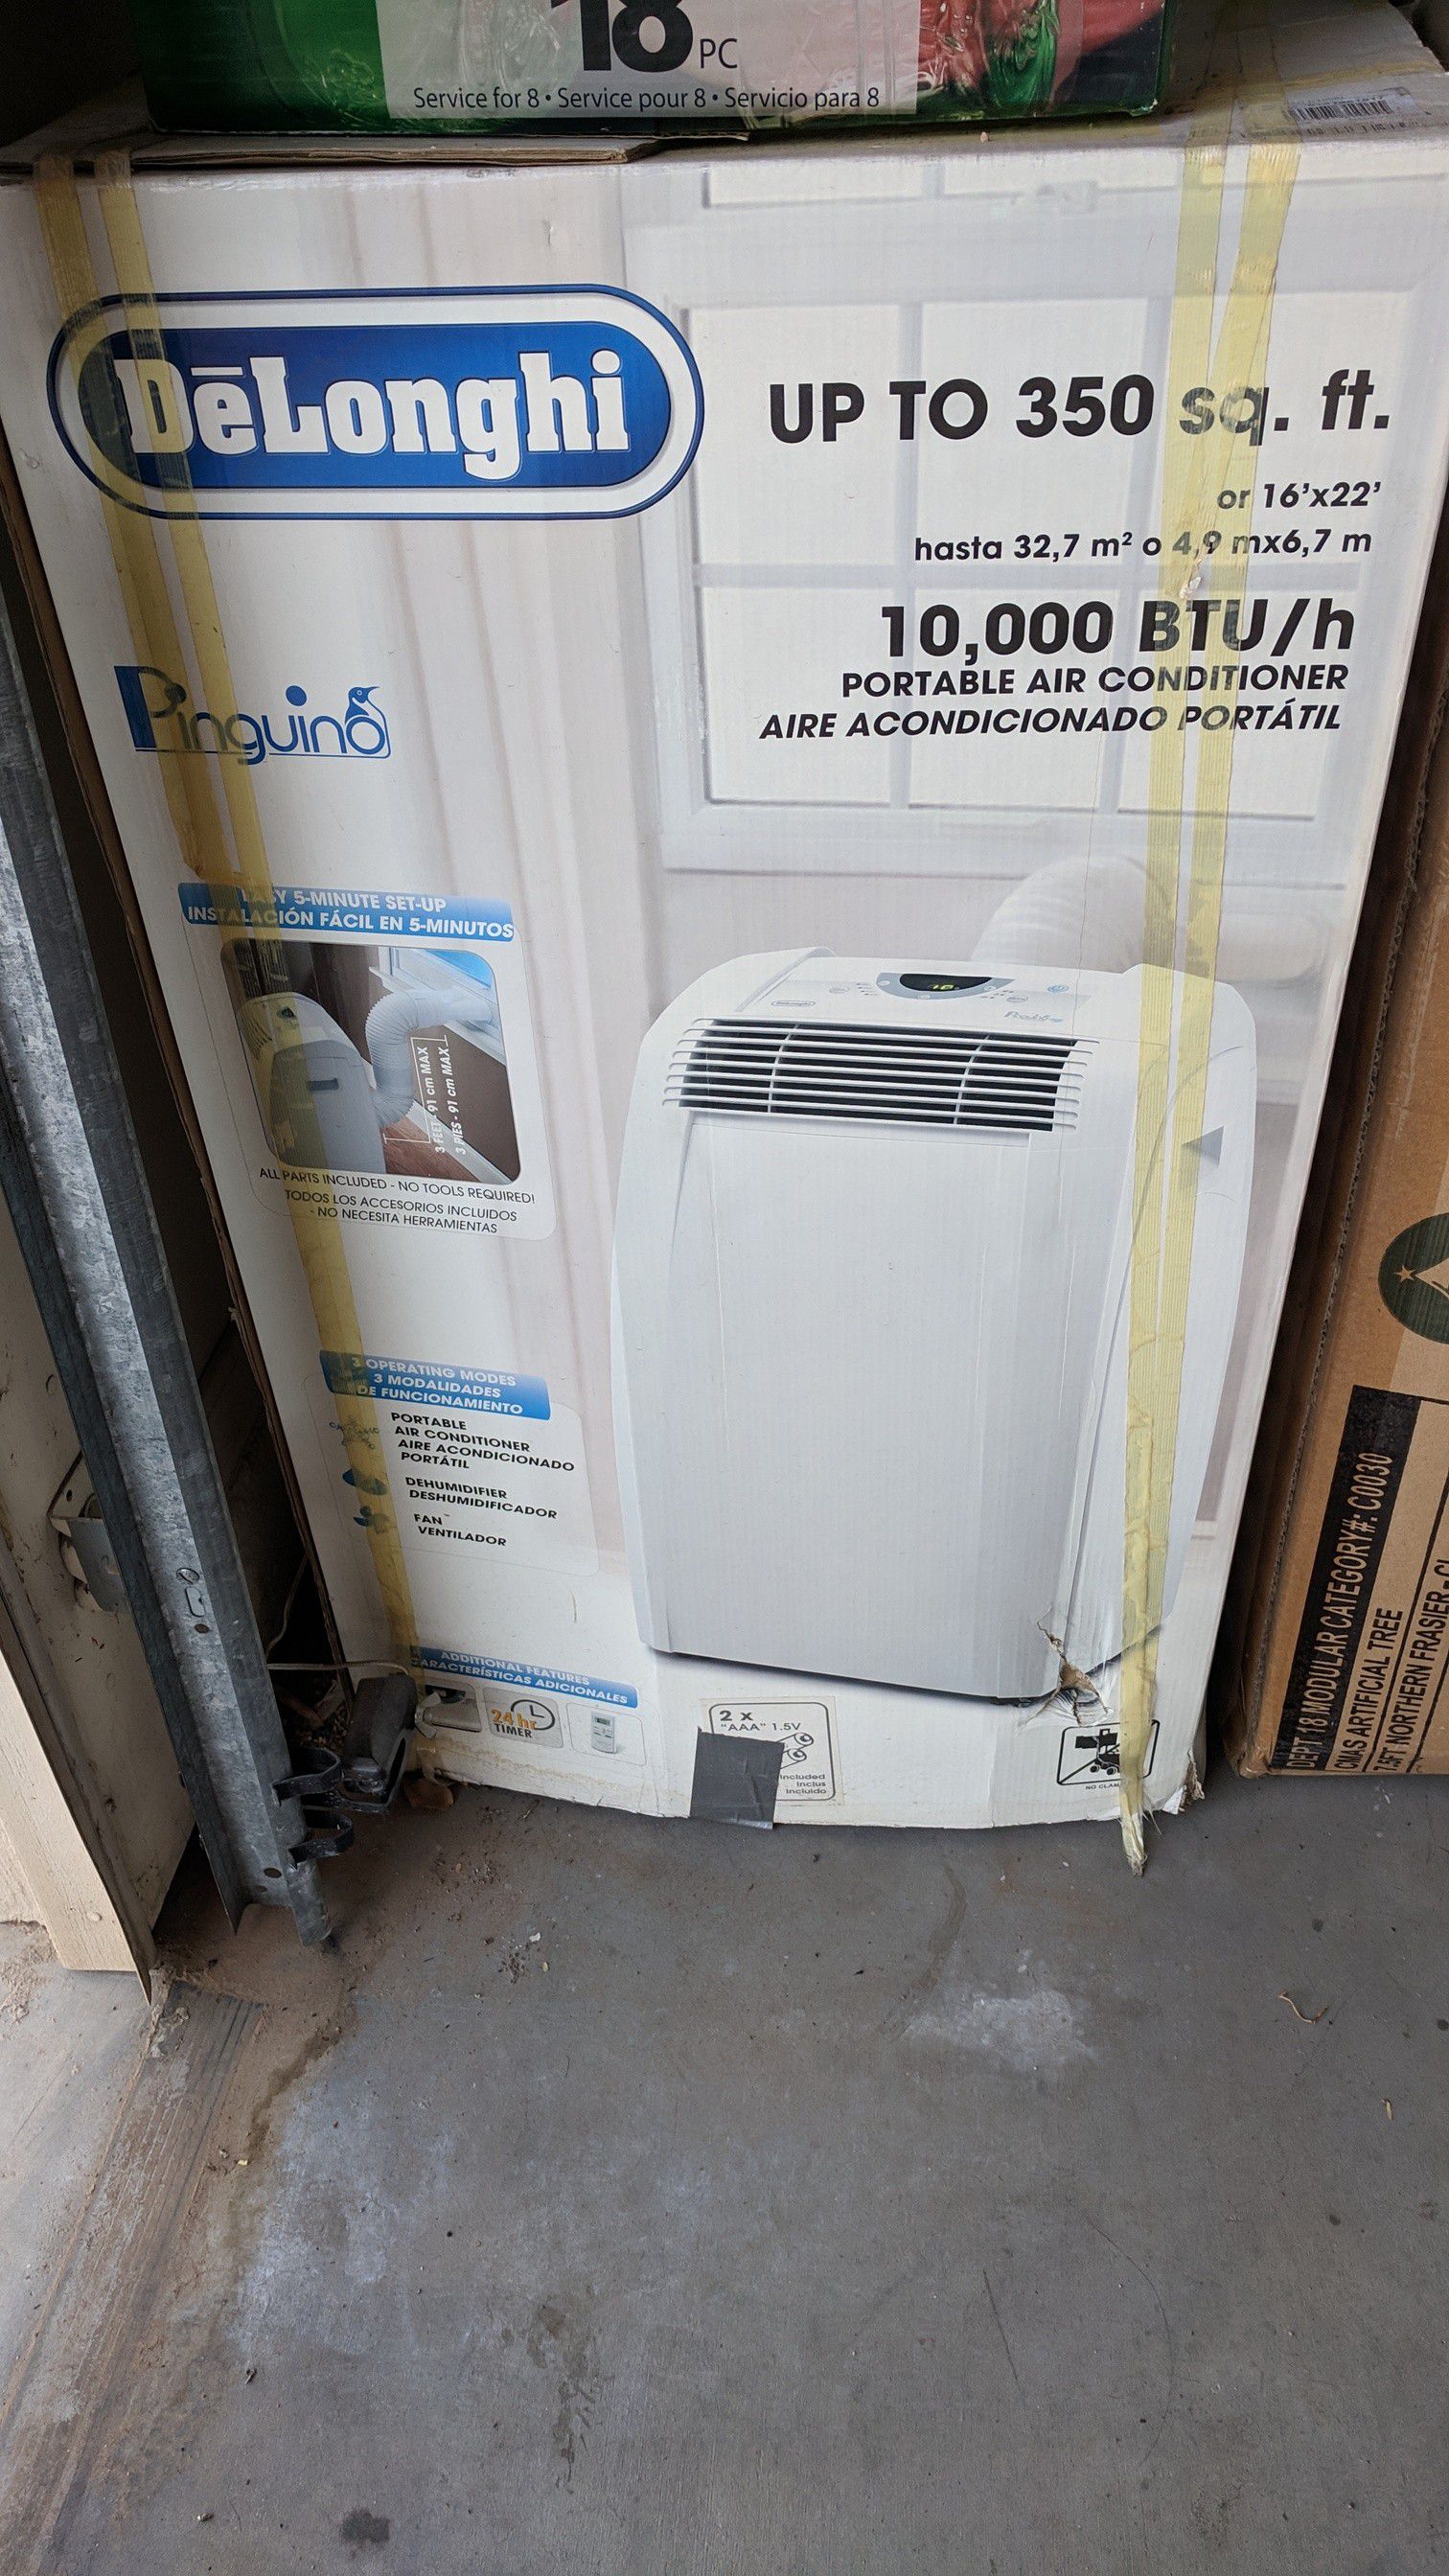 Portable Air Conditioner 10000 BTU/h